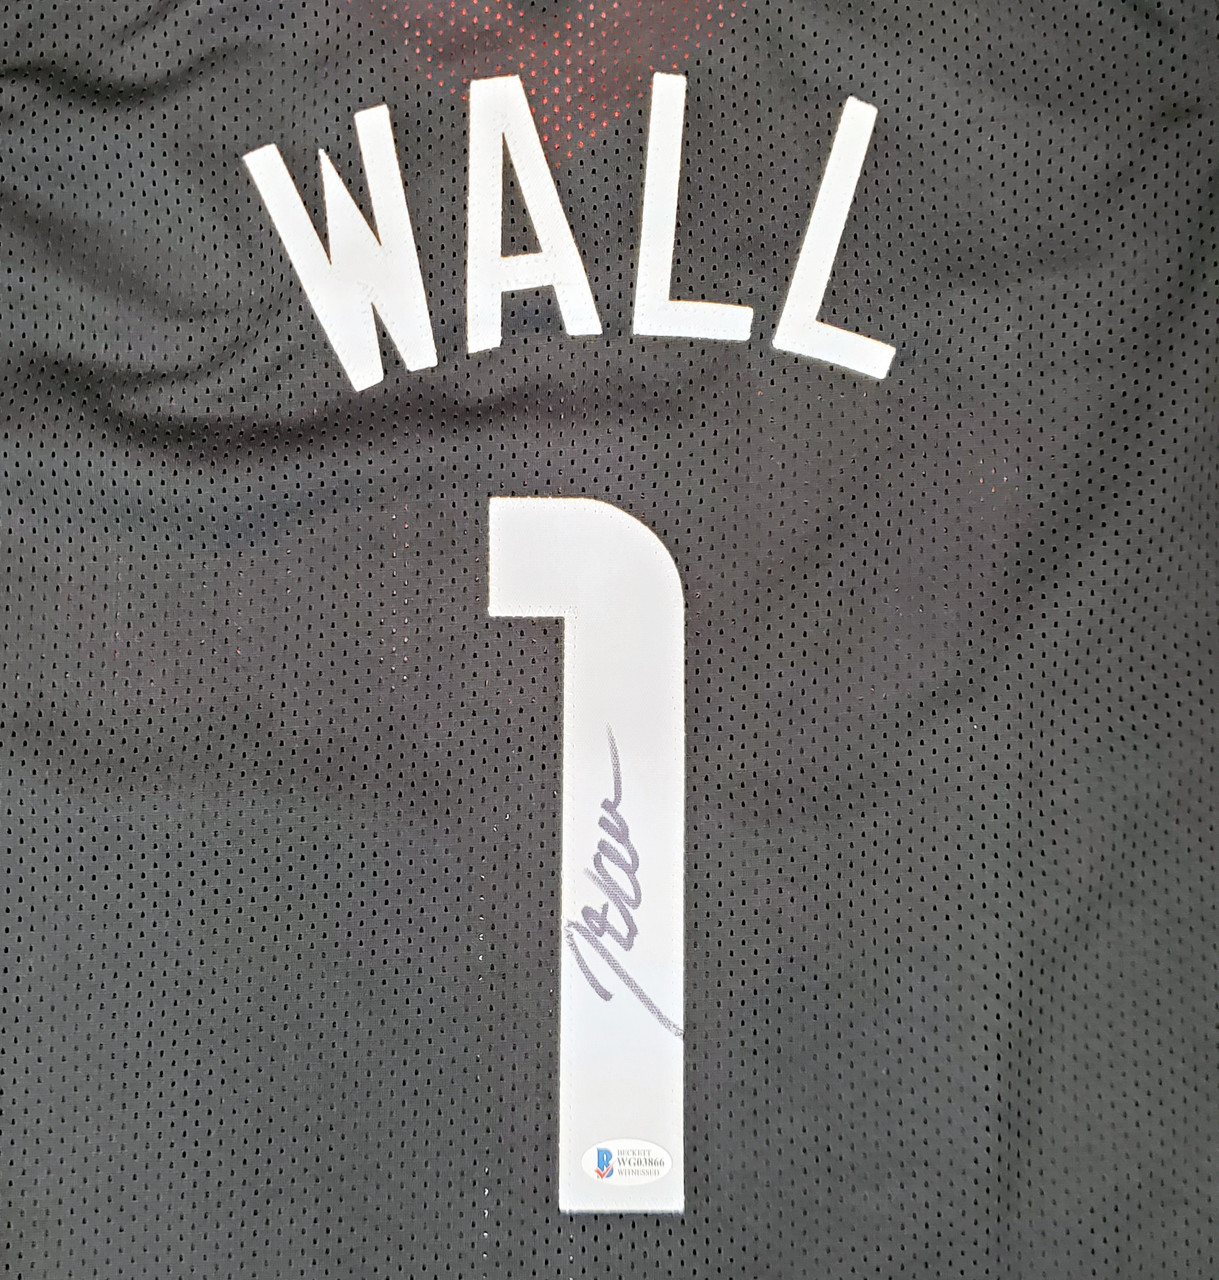 Washington Wizards John Wall Autographed Red Nike Swingman Jersey